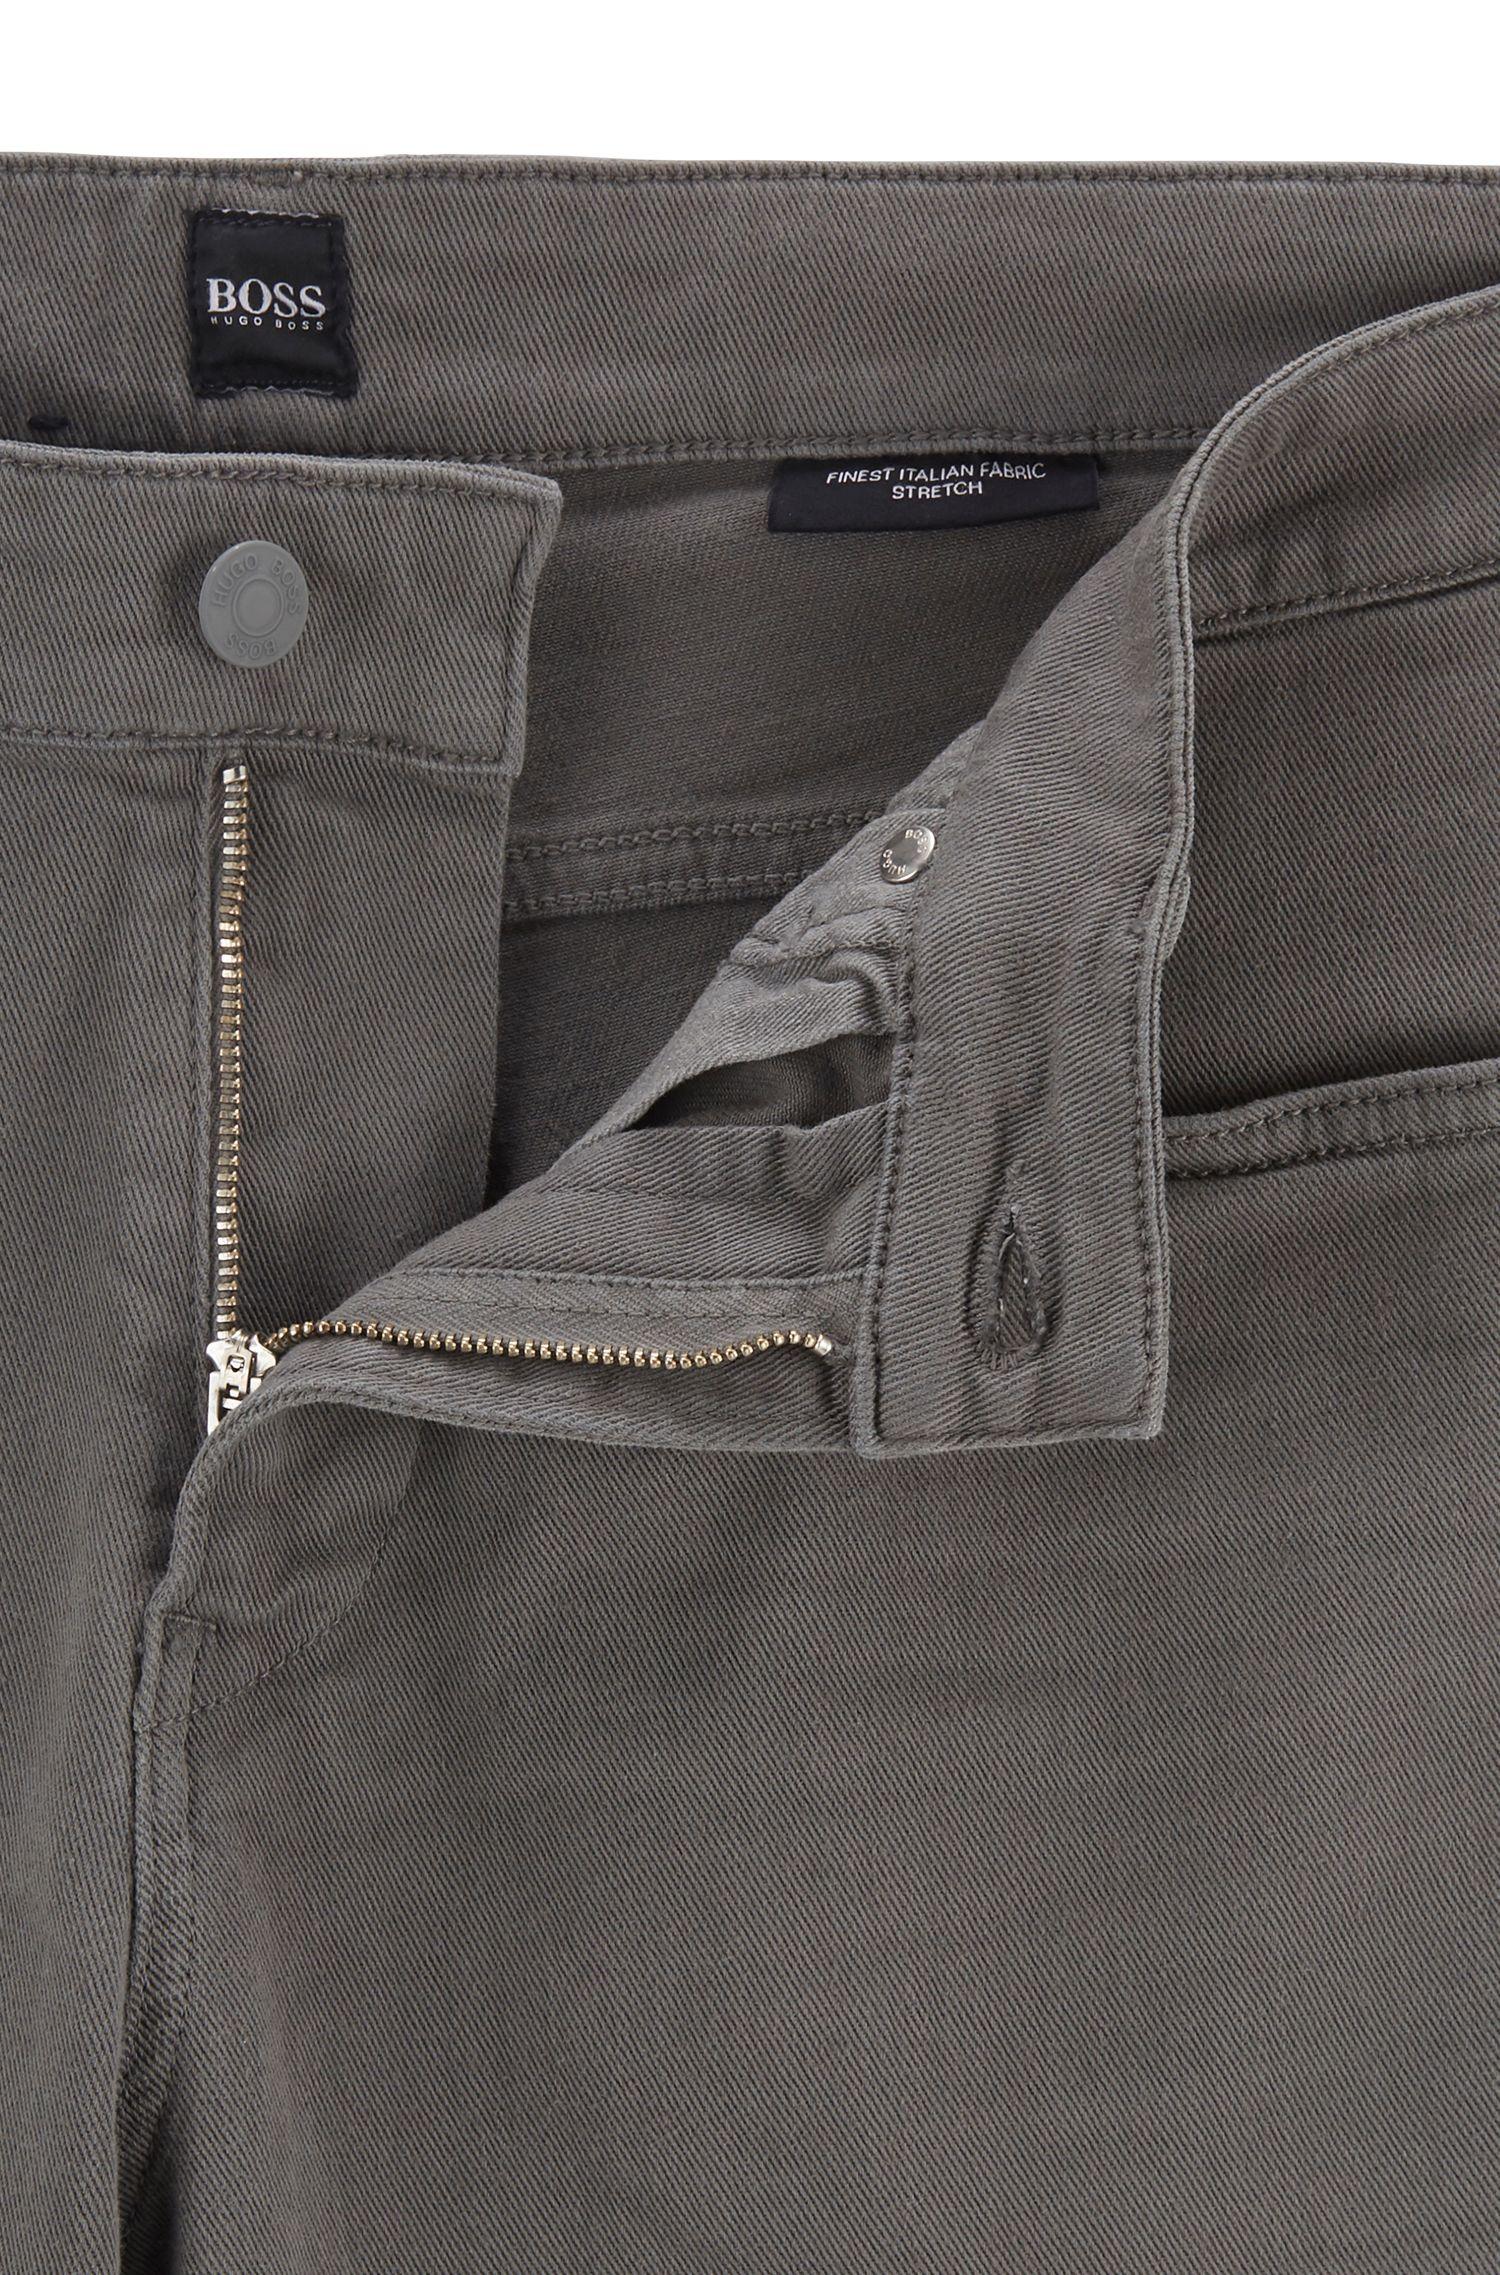 BOSS by Hugo Boss Slim Fit Jeans In Super Soft Italian Stretch Denim in ...